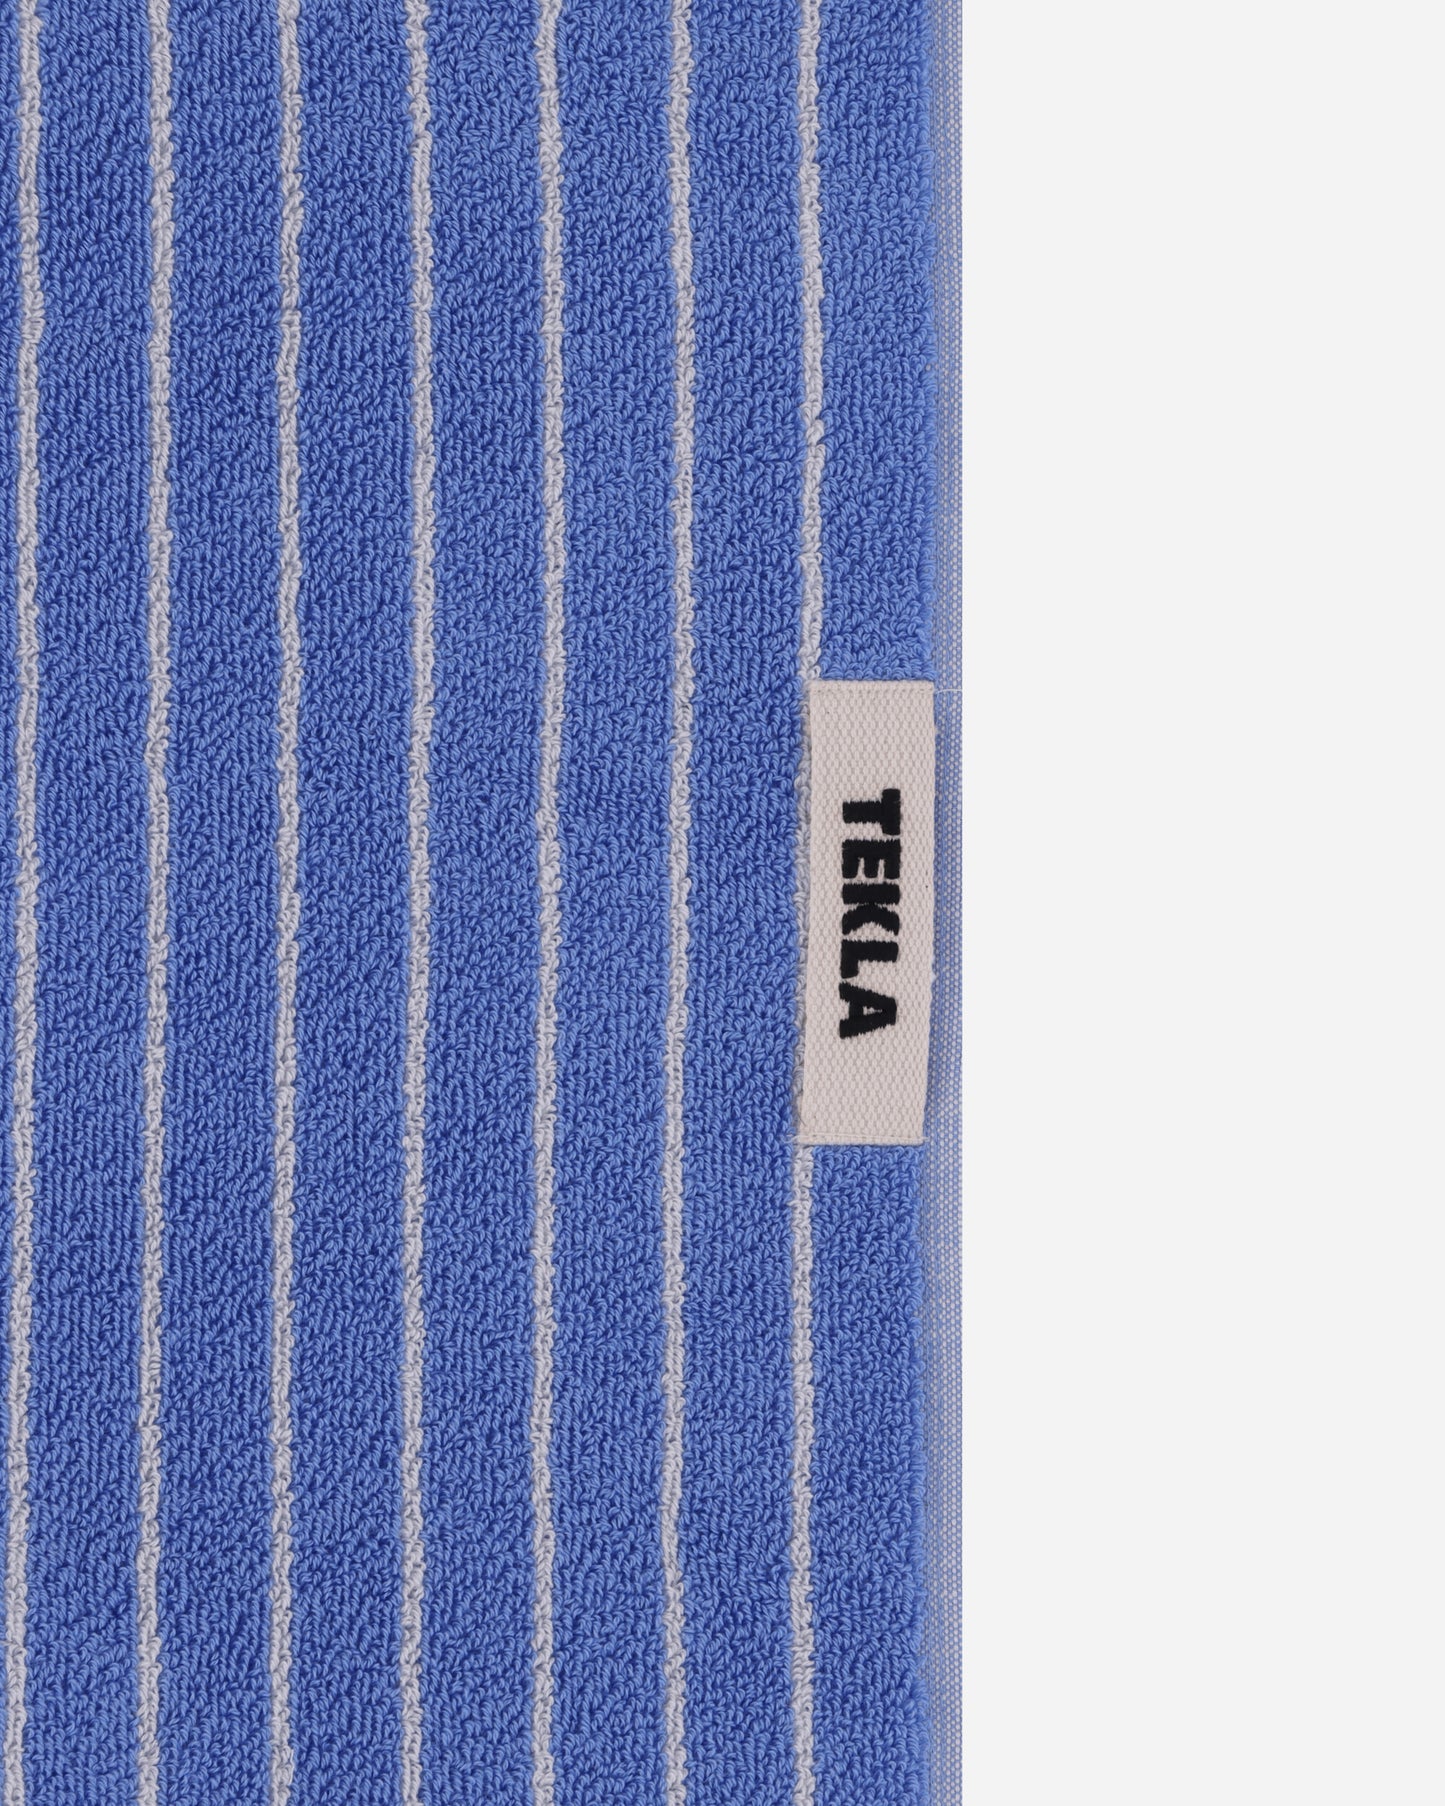 Tekla Terry Towel - Striped 50X80 Clear Blue Stripes Textile Bath Towels TT-50x80 CLS